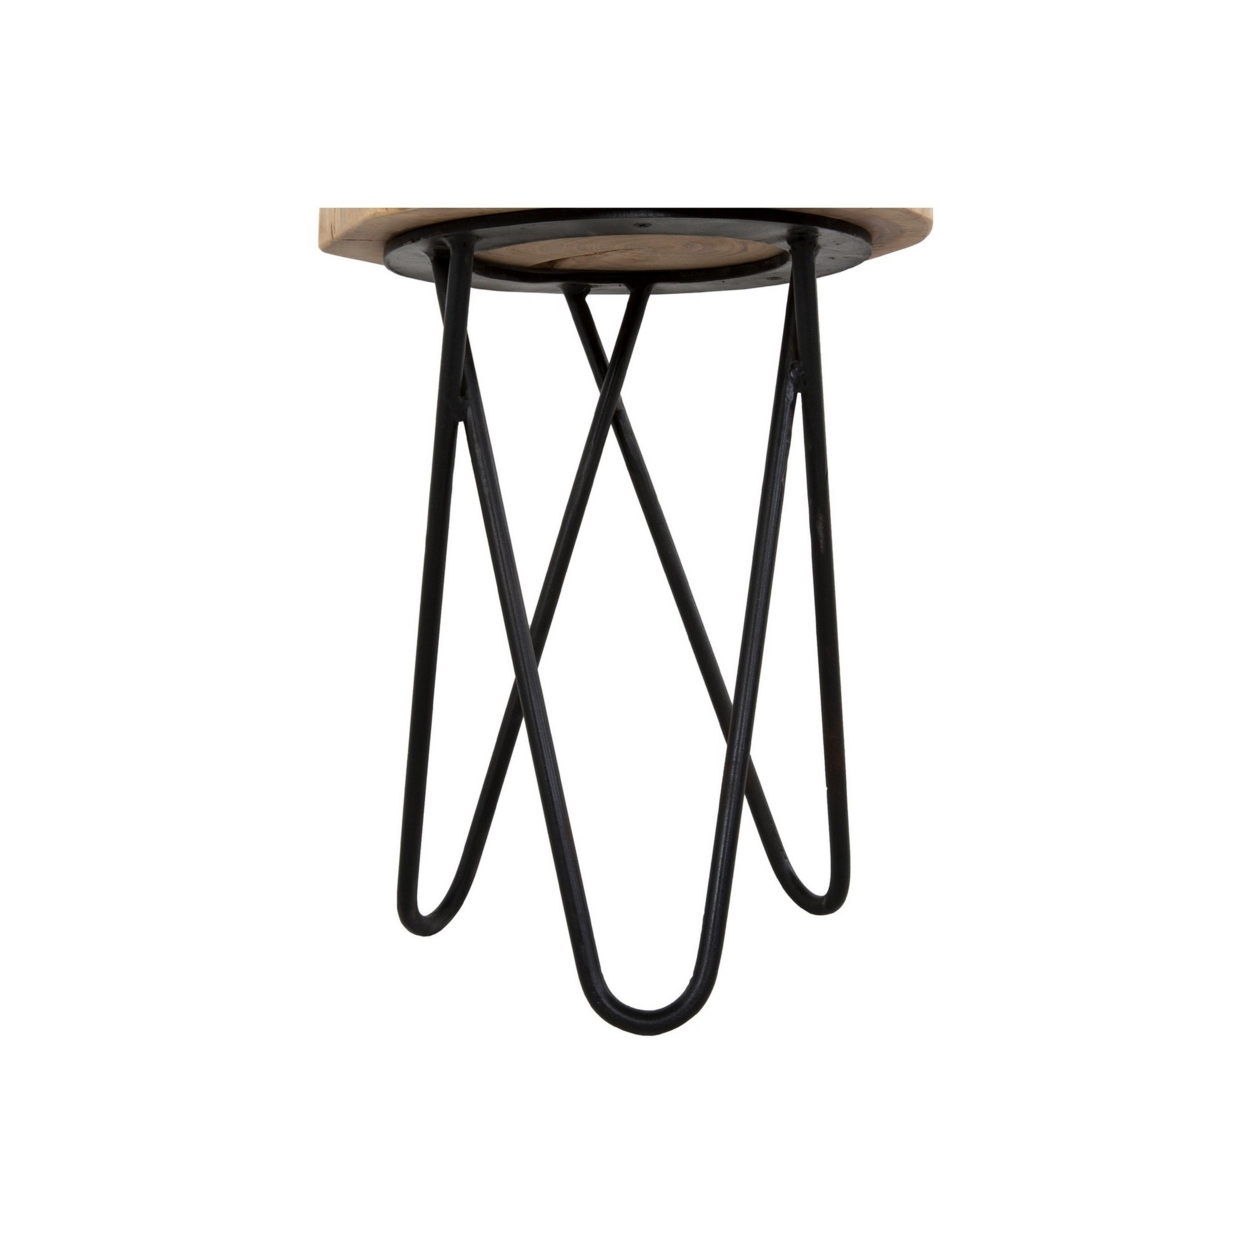 18 Inch Side Table, Wood Tabletop, Hairpin Style Iron Legs, Brown, Black- Saltoro Sherpi